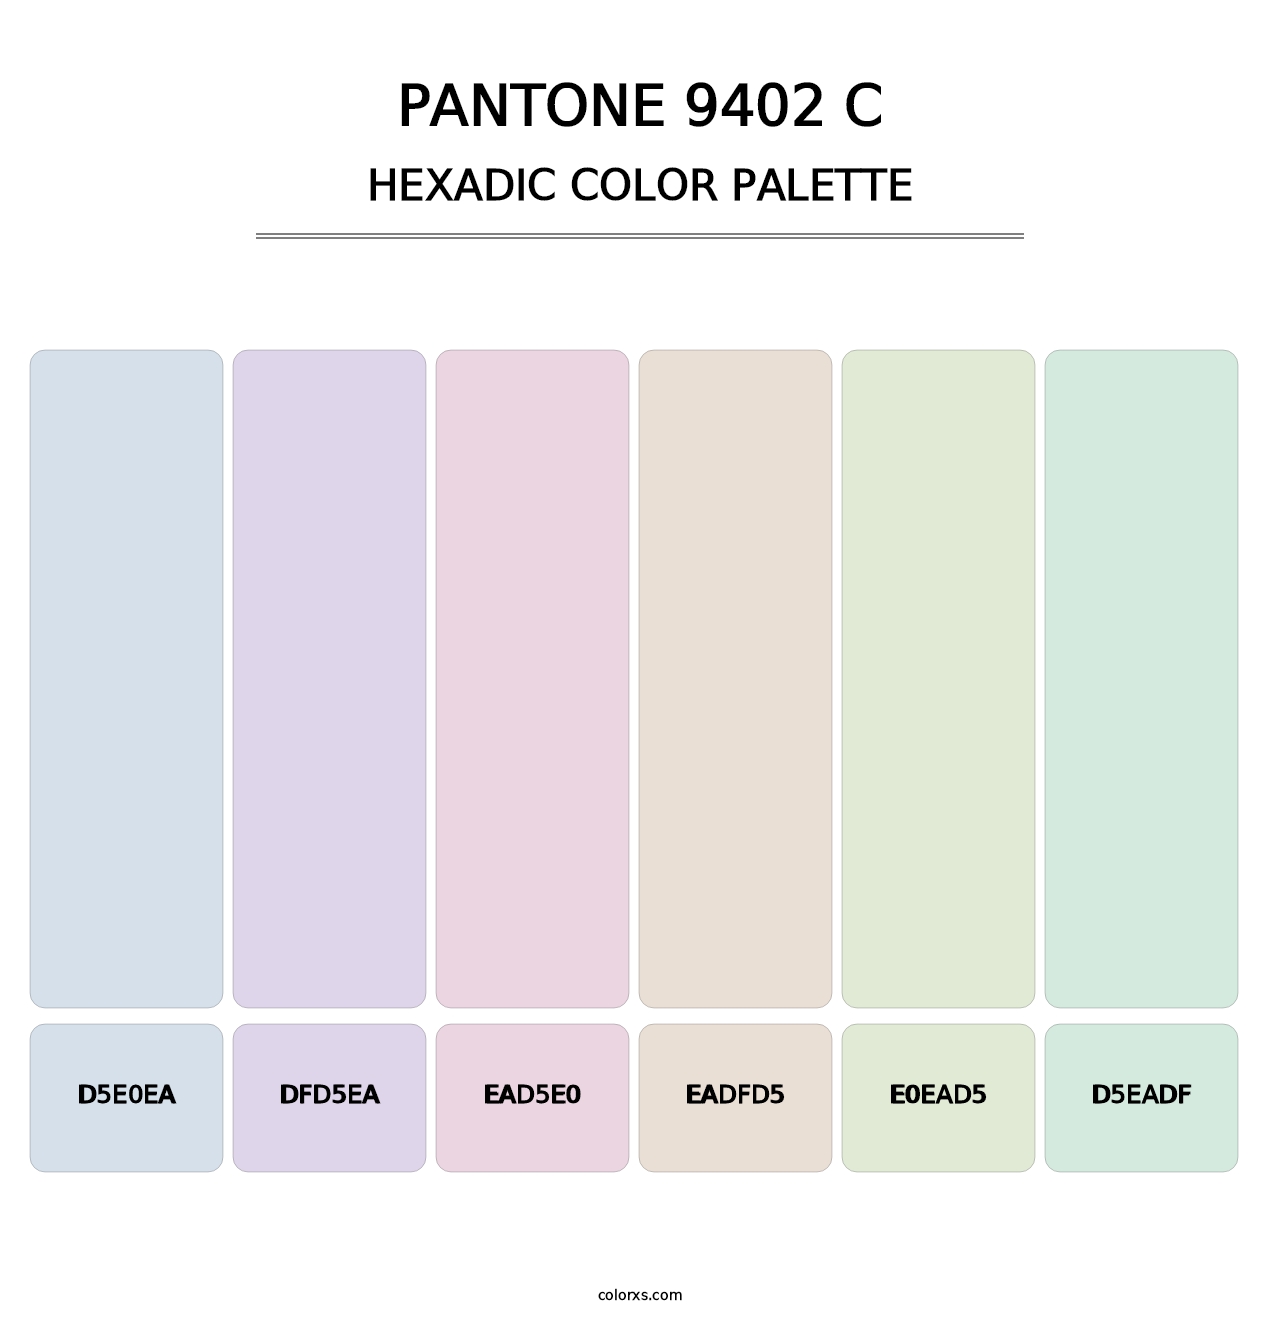 PANTONE 9402 C - Hexadic Color Palette